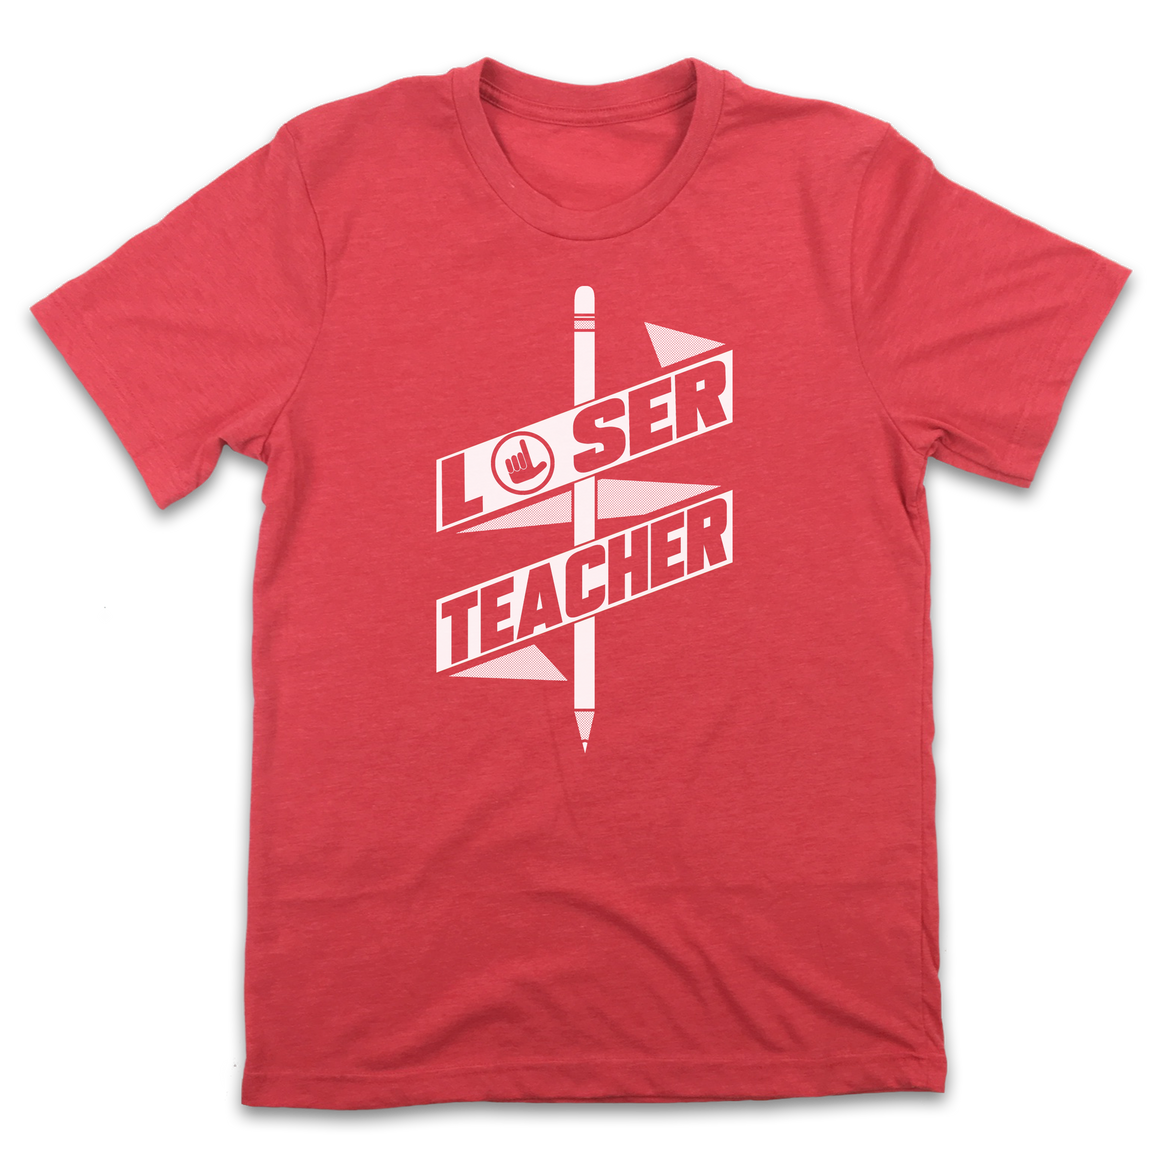 Loser Teacher - Unisex T-Shirt